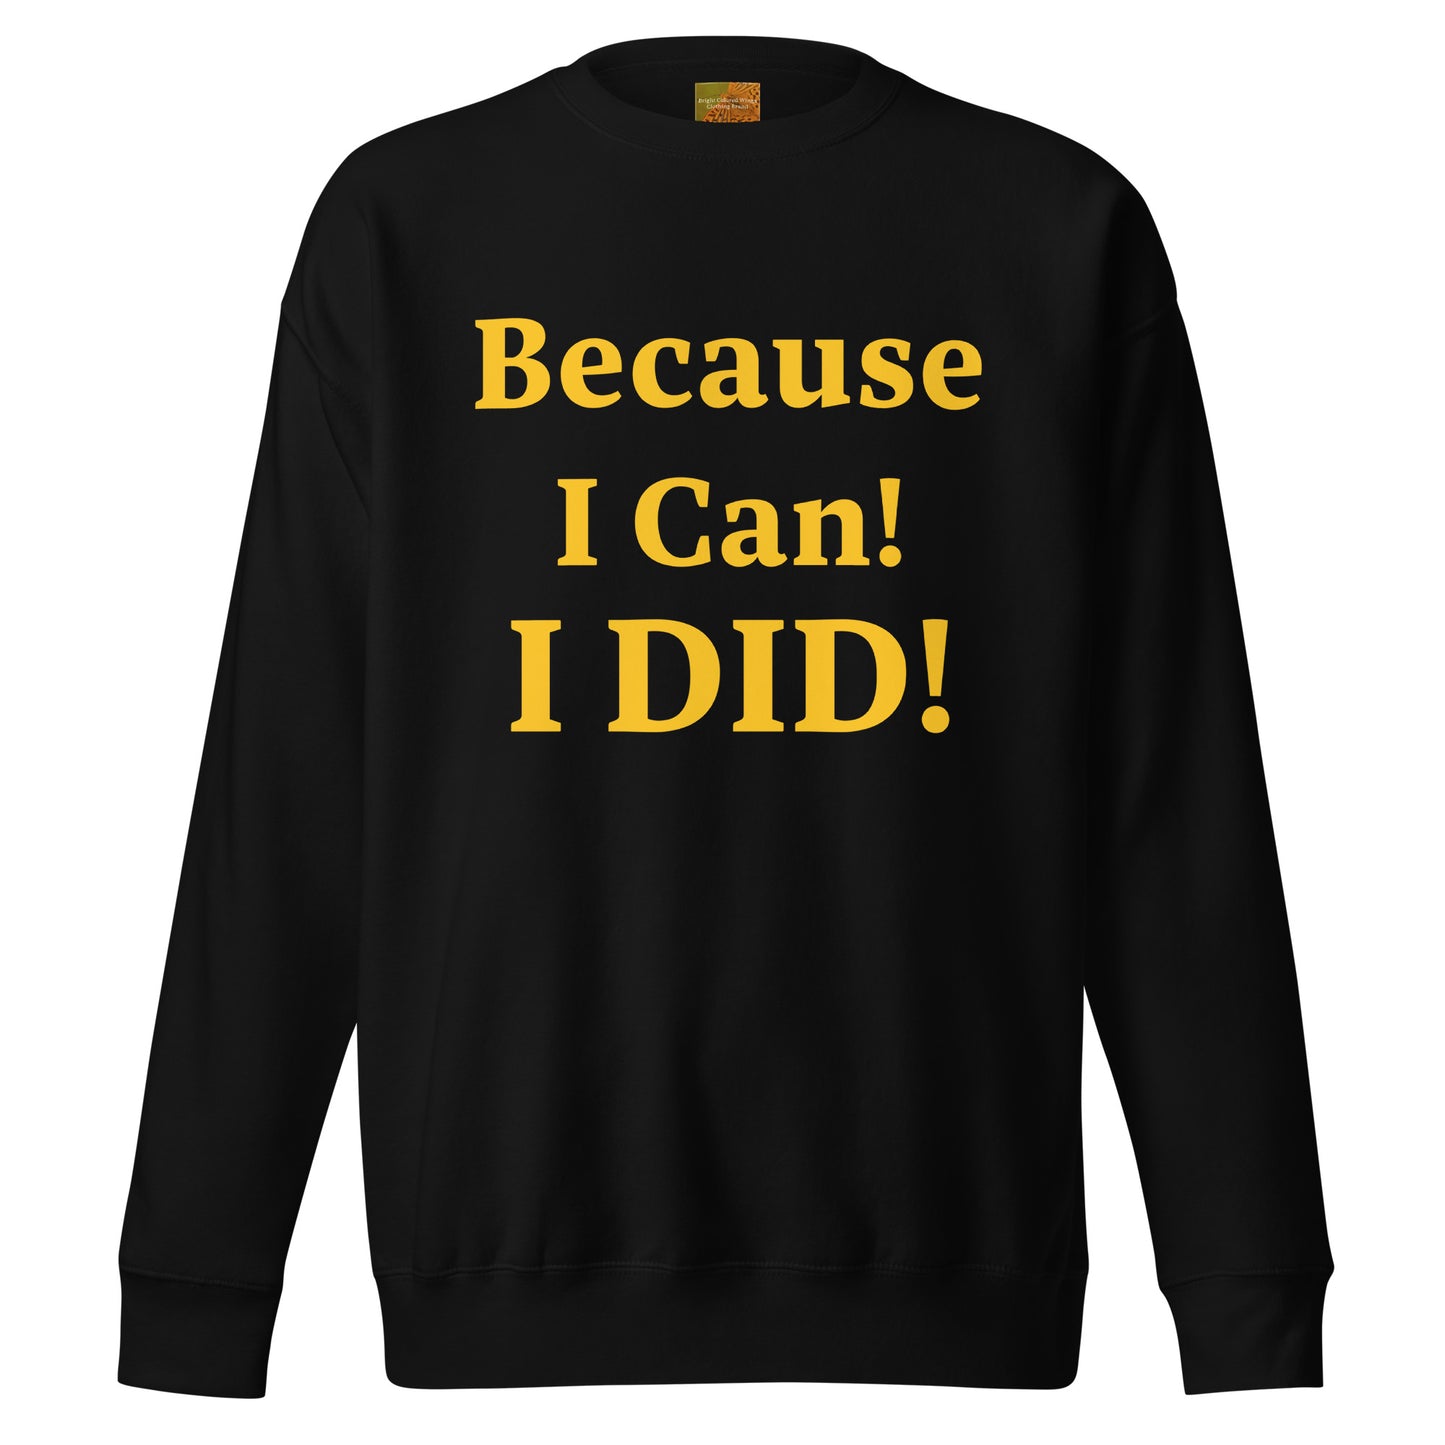 Because I Can! I DID! Unisex Premium Sweatshirt